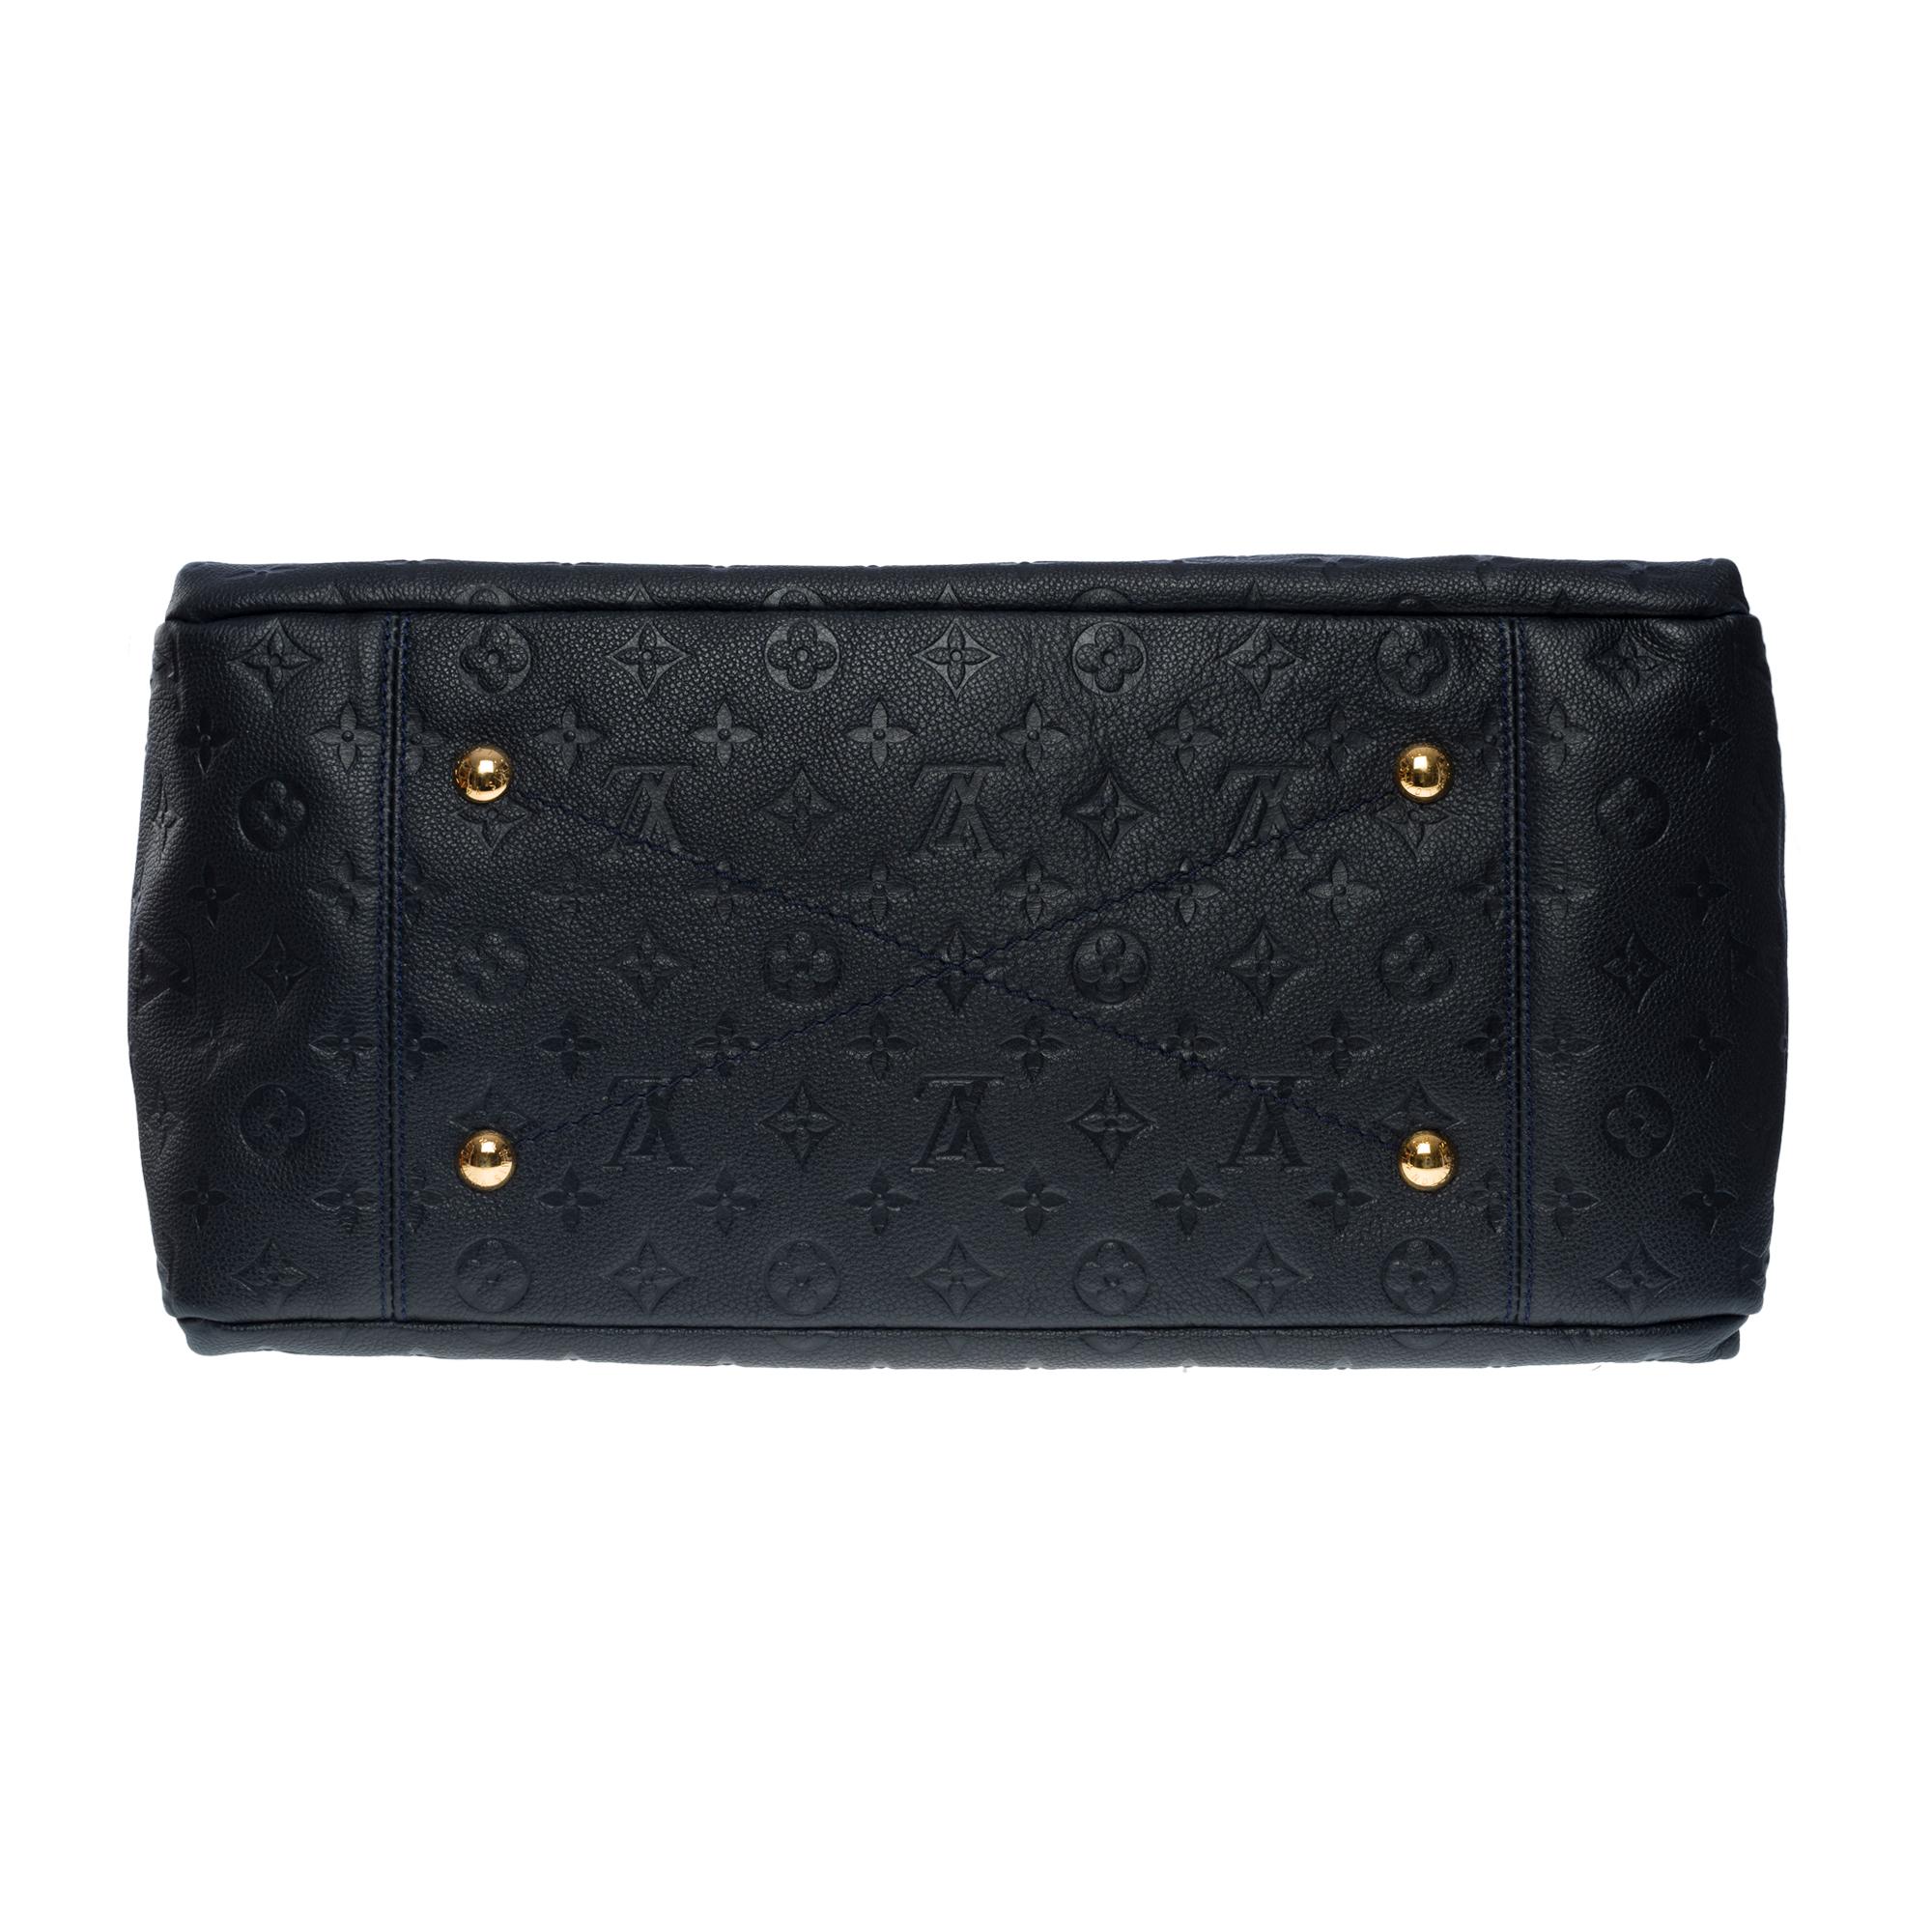 Louis Vuitton Artsy MM Hobo bag in dark blue monogram calfskin leather, GHW For Sale 5